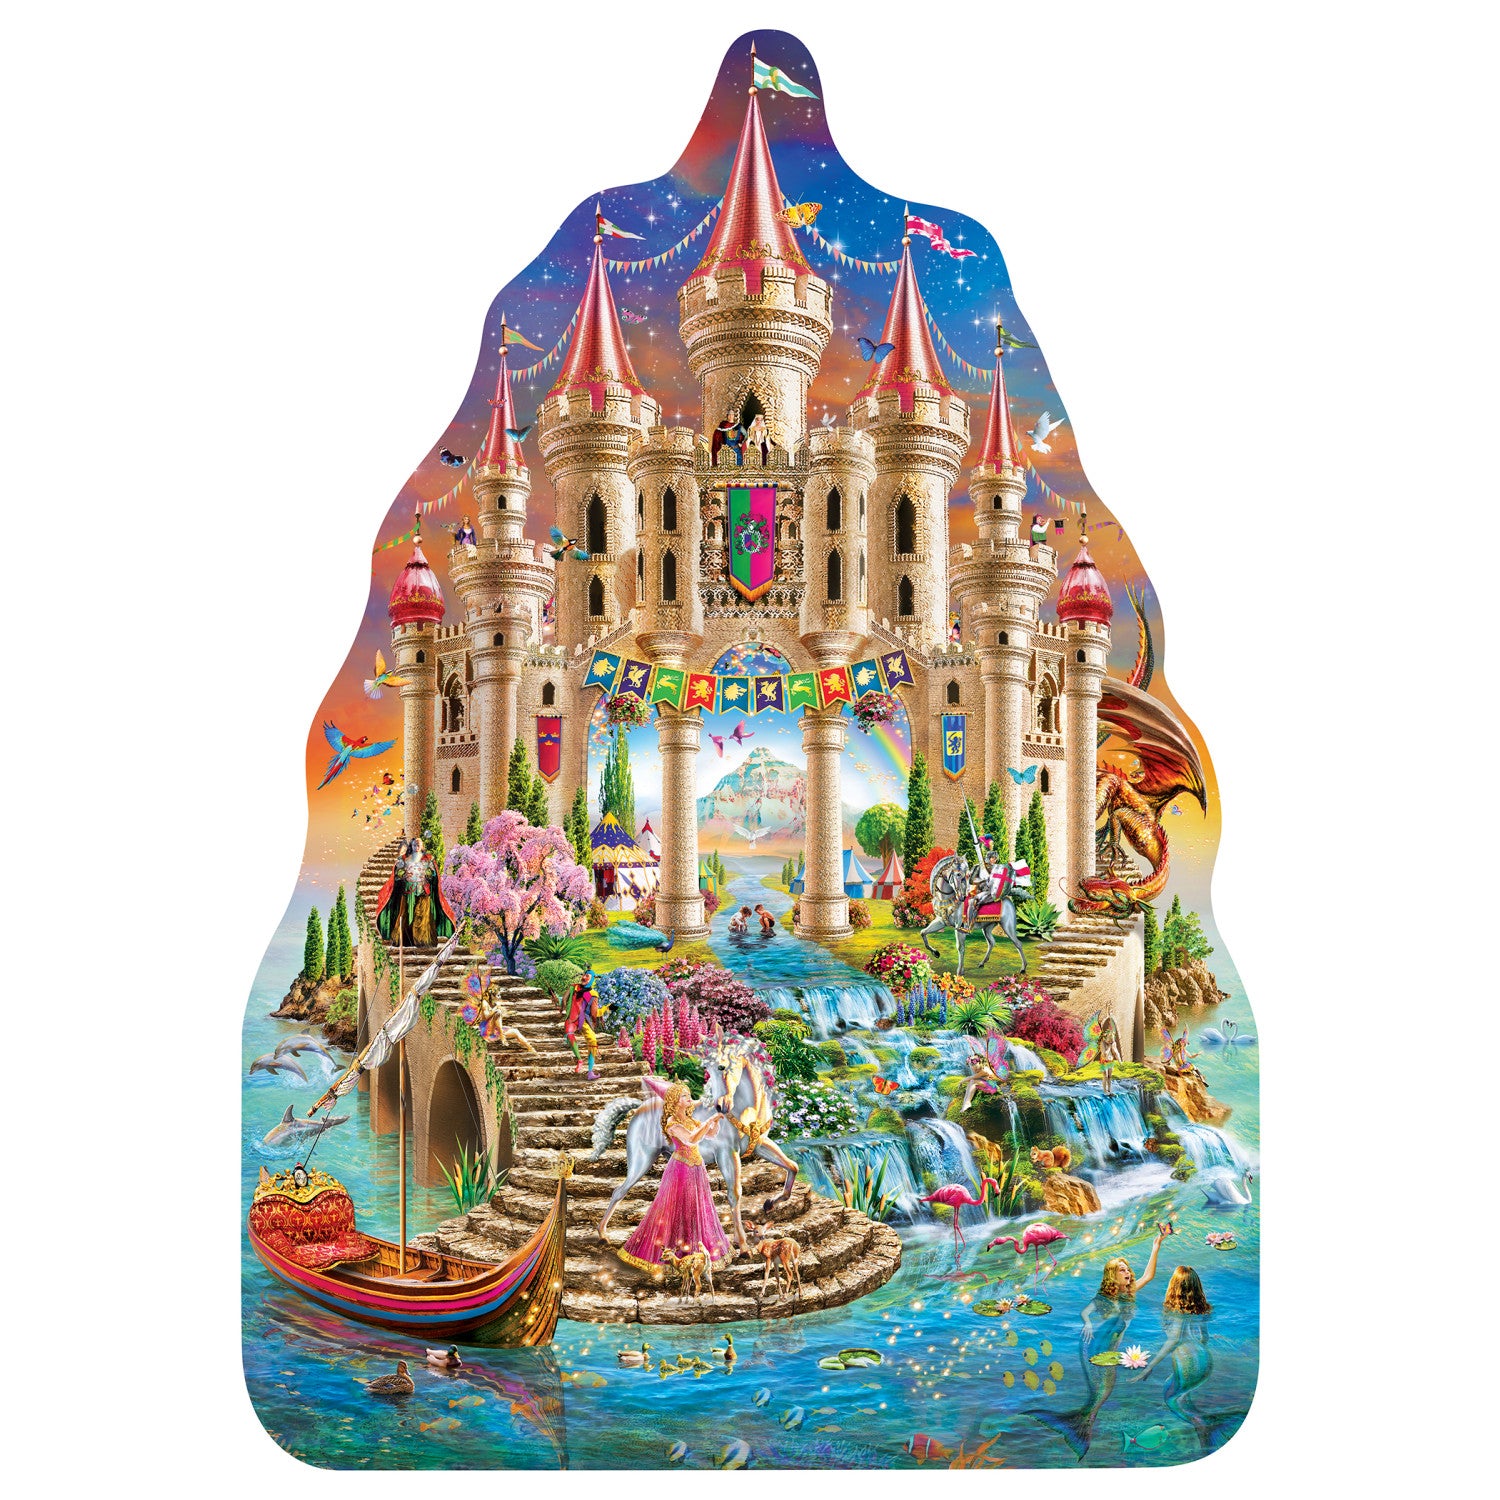 Fairytale Kingdom - 100 Piece Shaped Puzzle